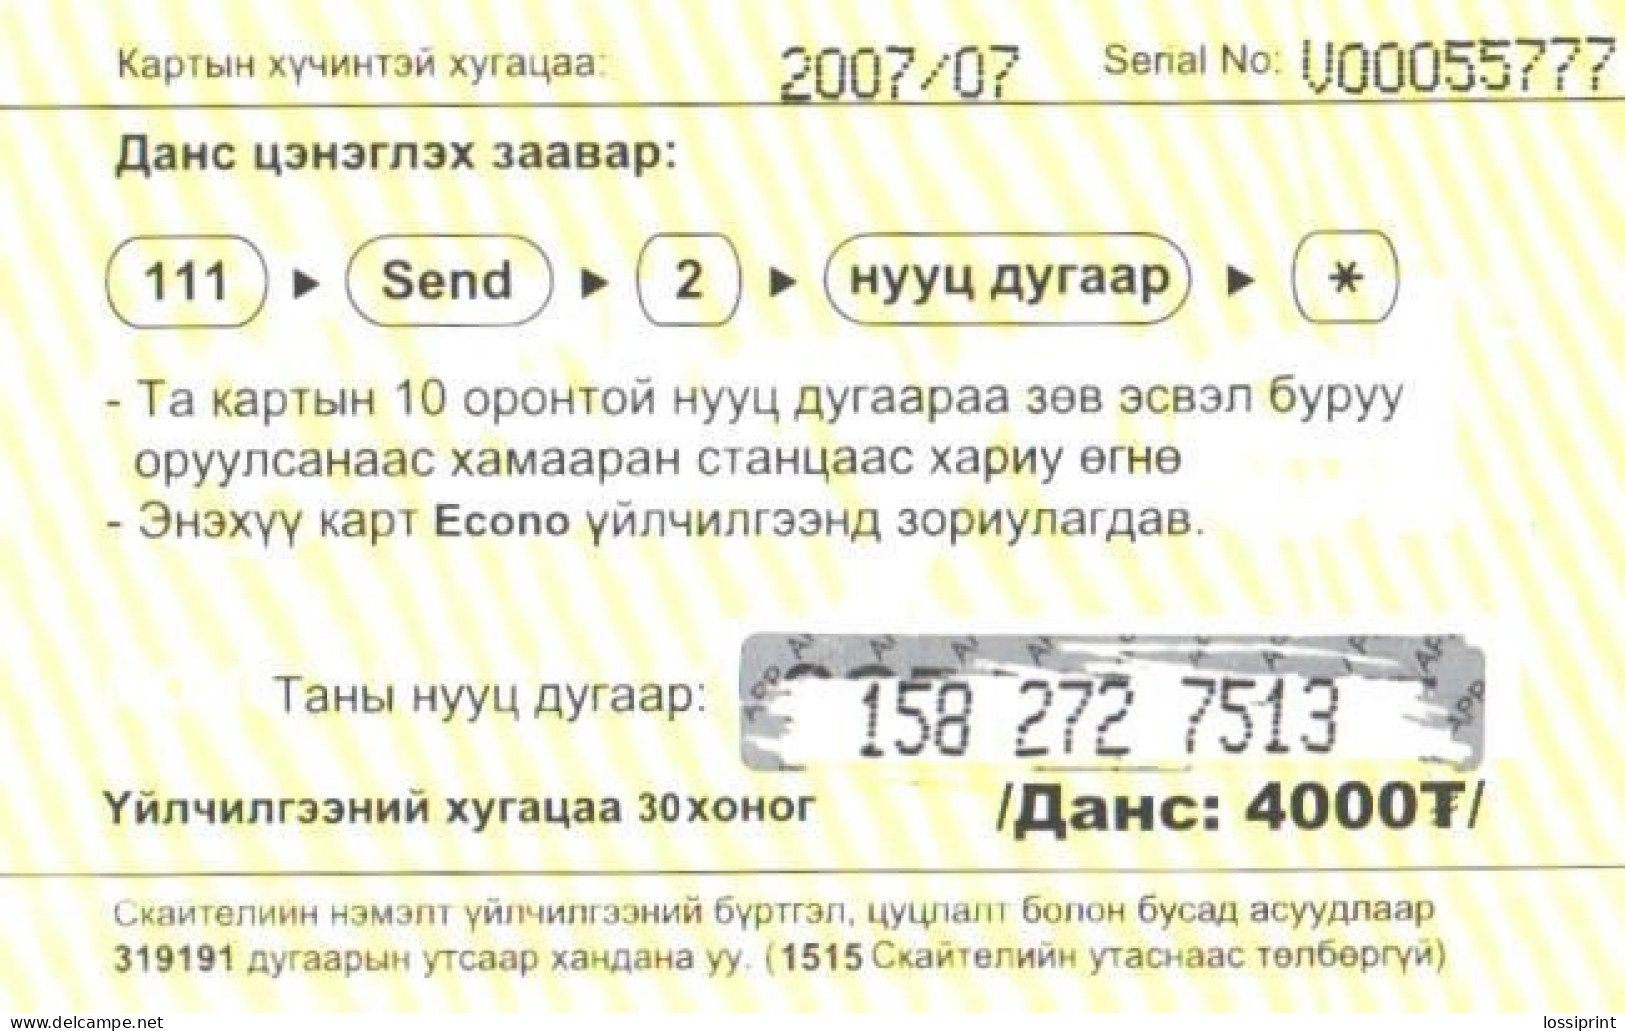 Mongolia:Used Phonecard, Skytel, 4000T, Letters, 2007 - Mongolia